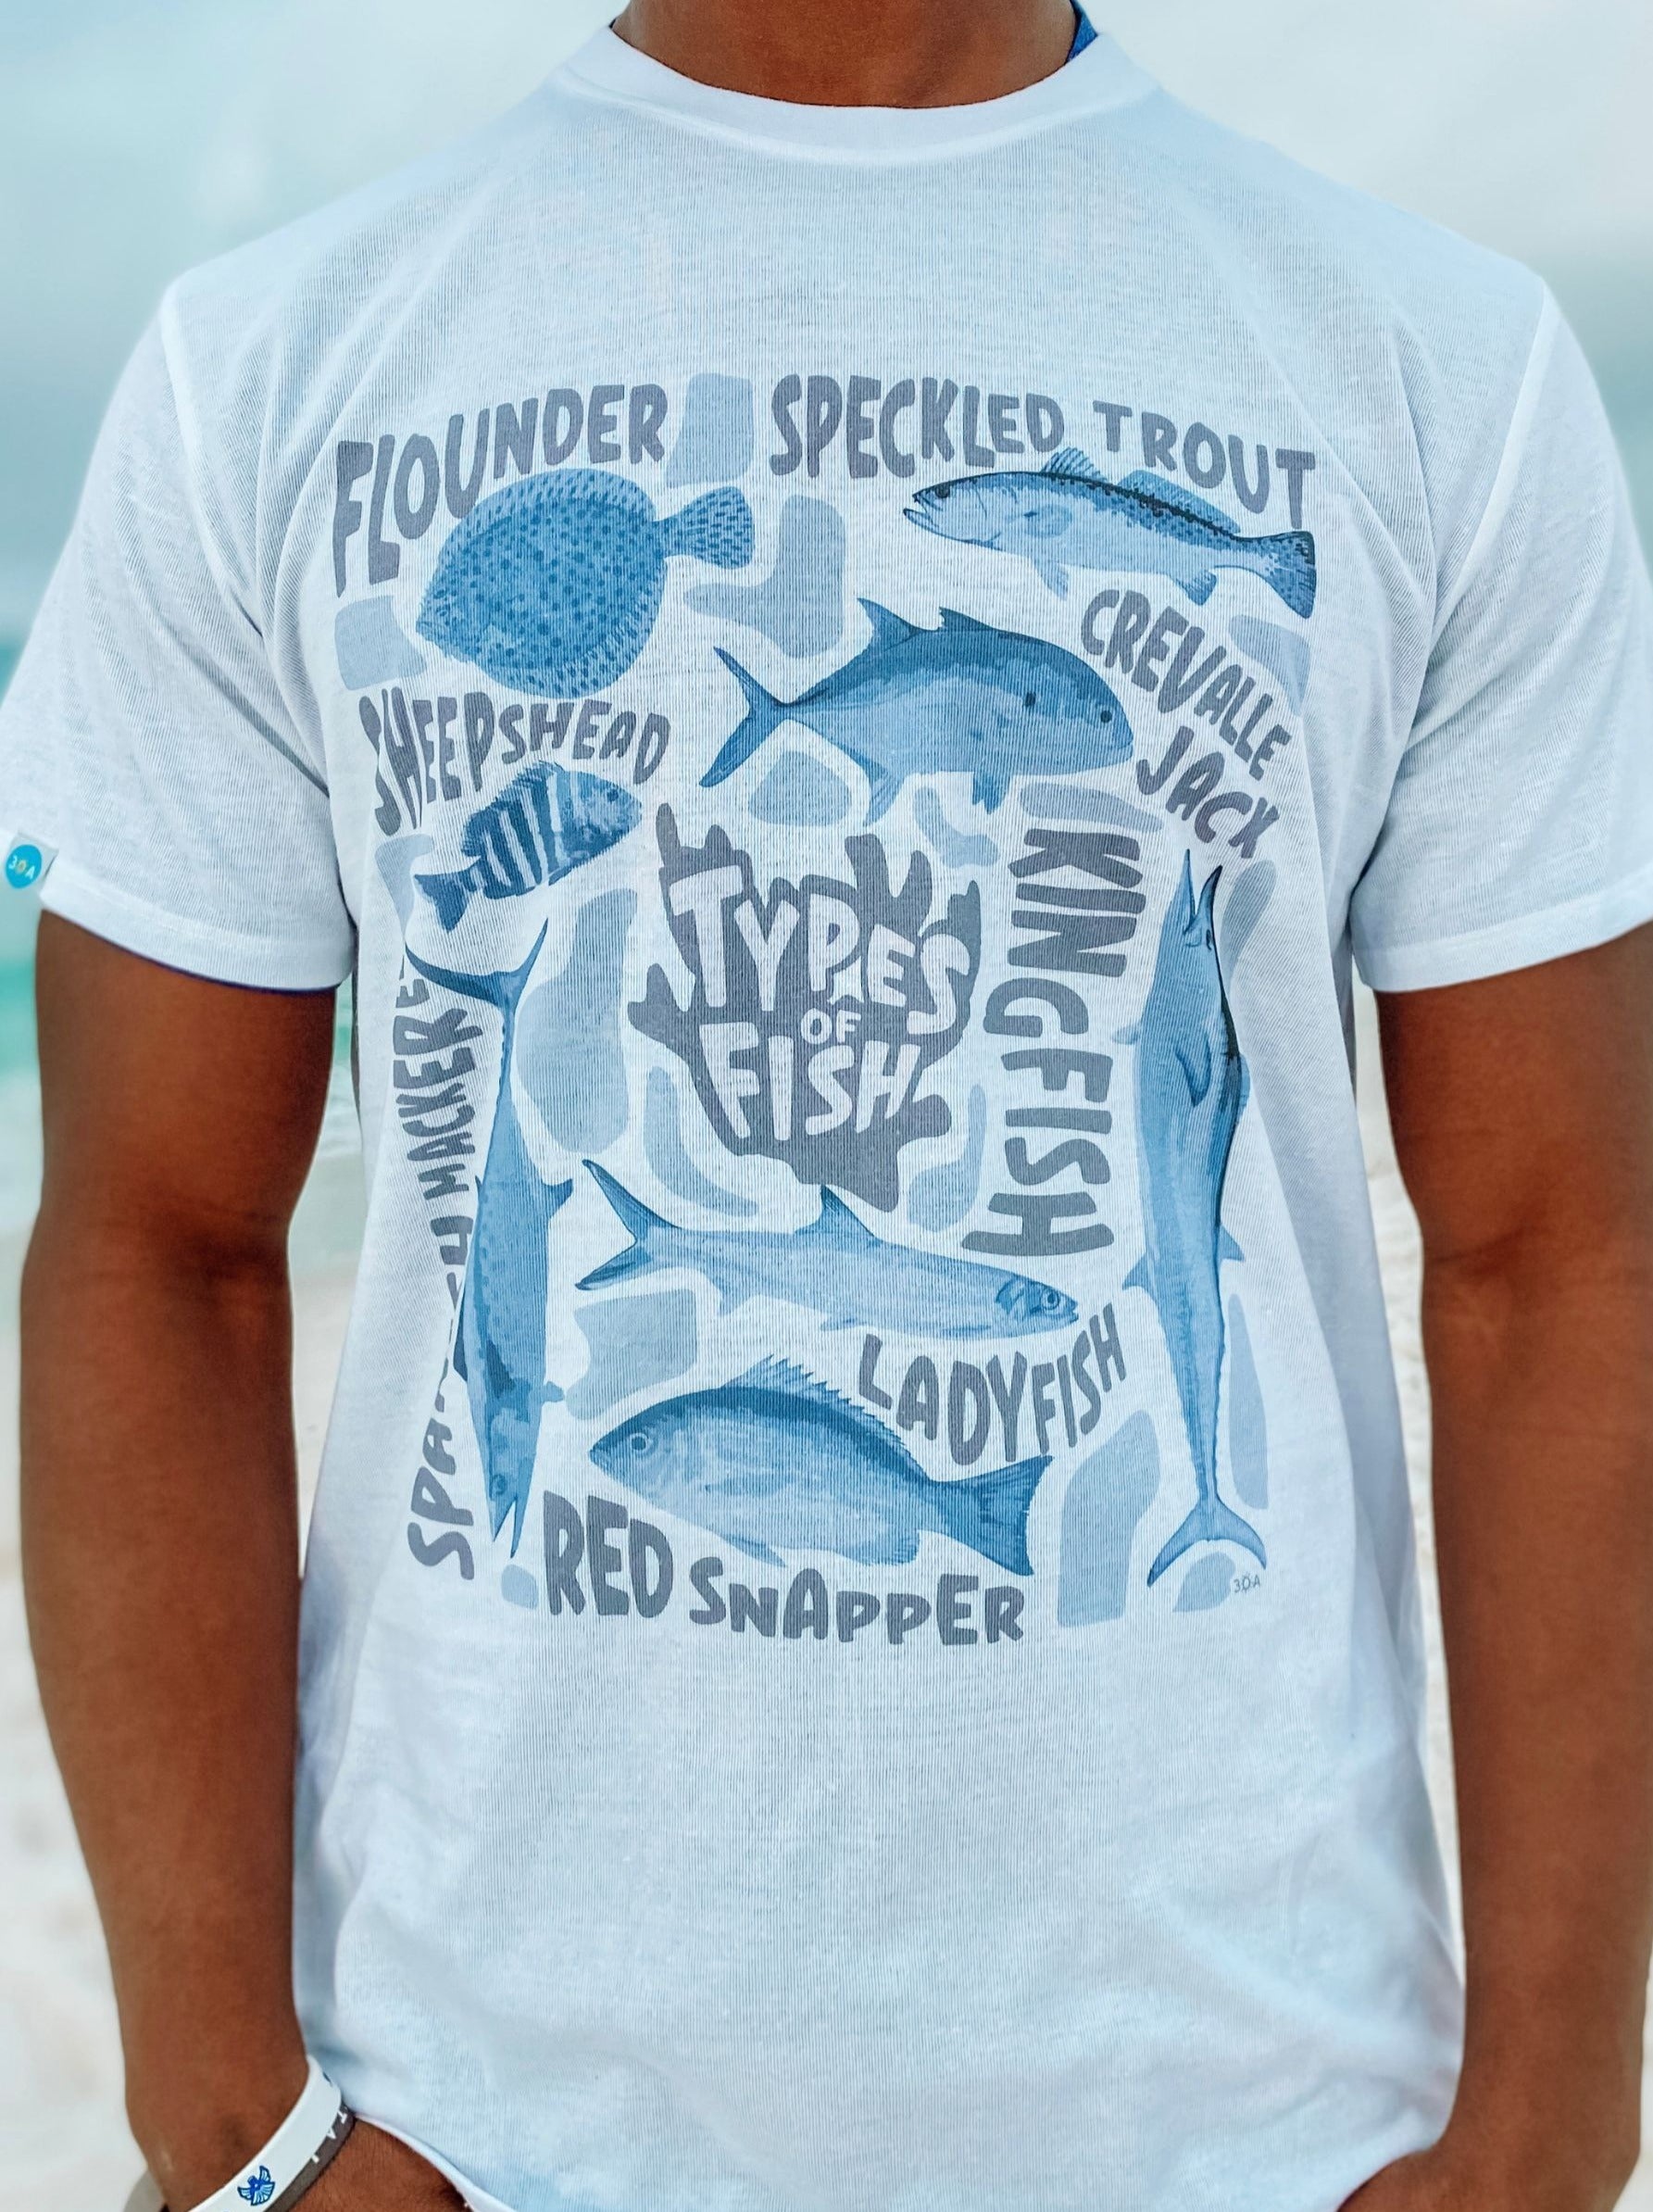 Types Of Fish T-Shirt